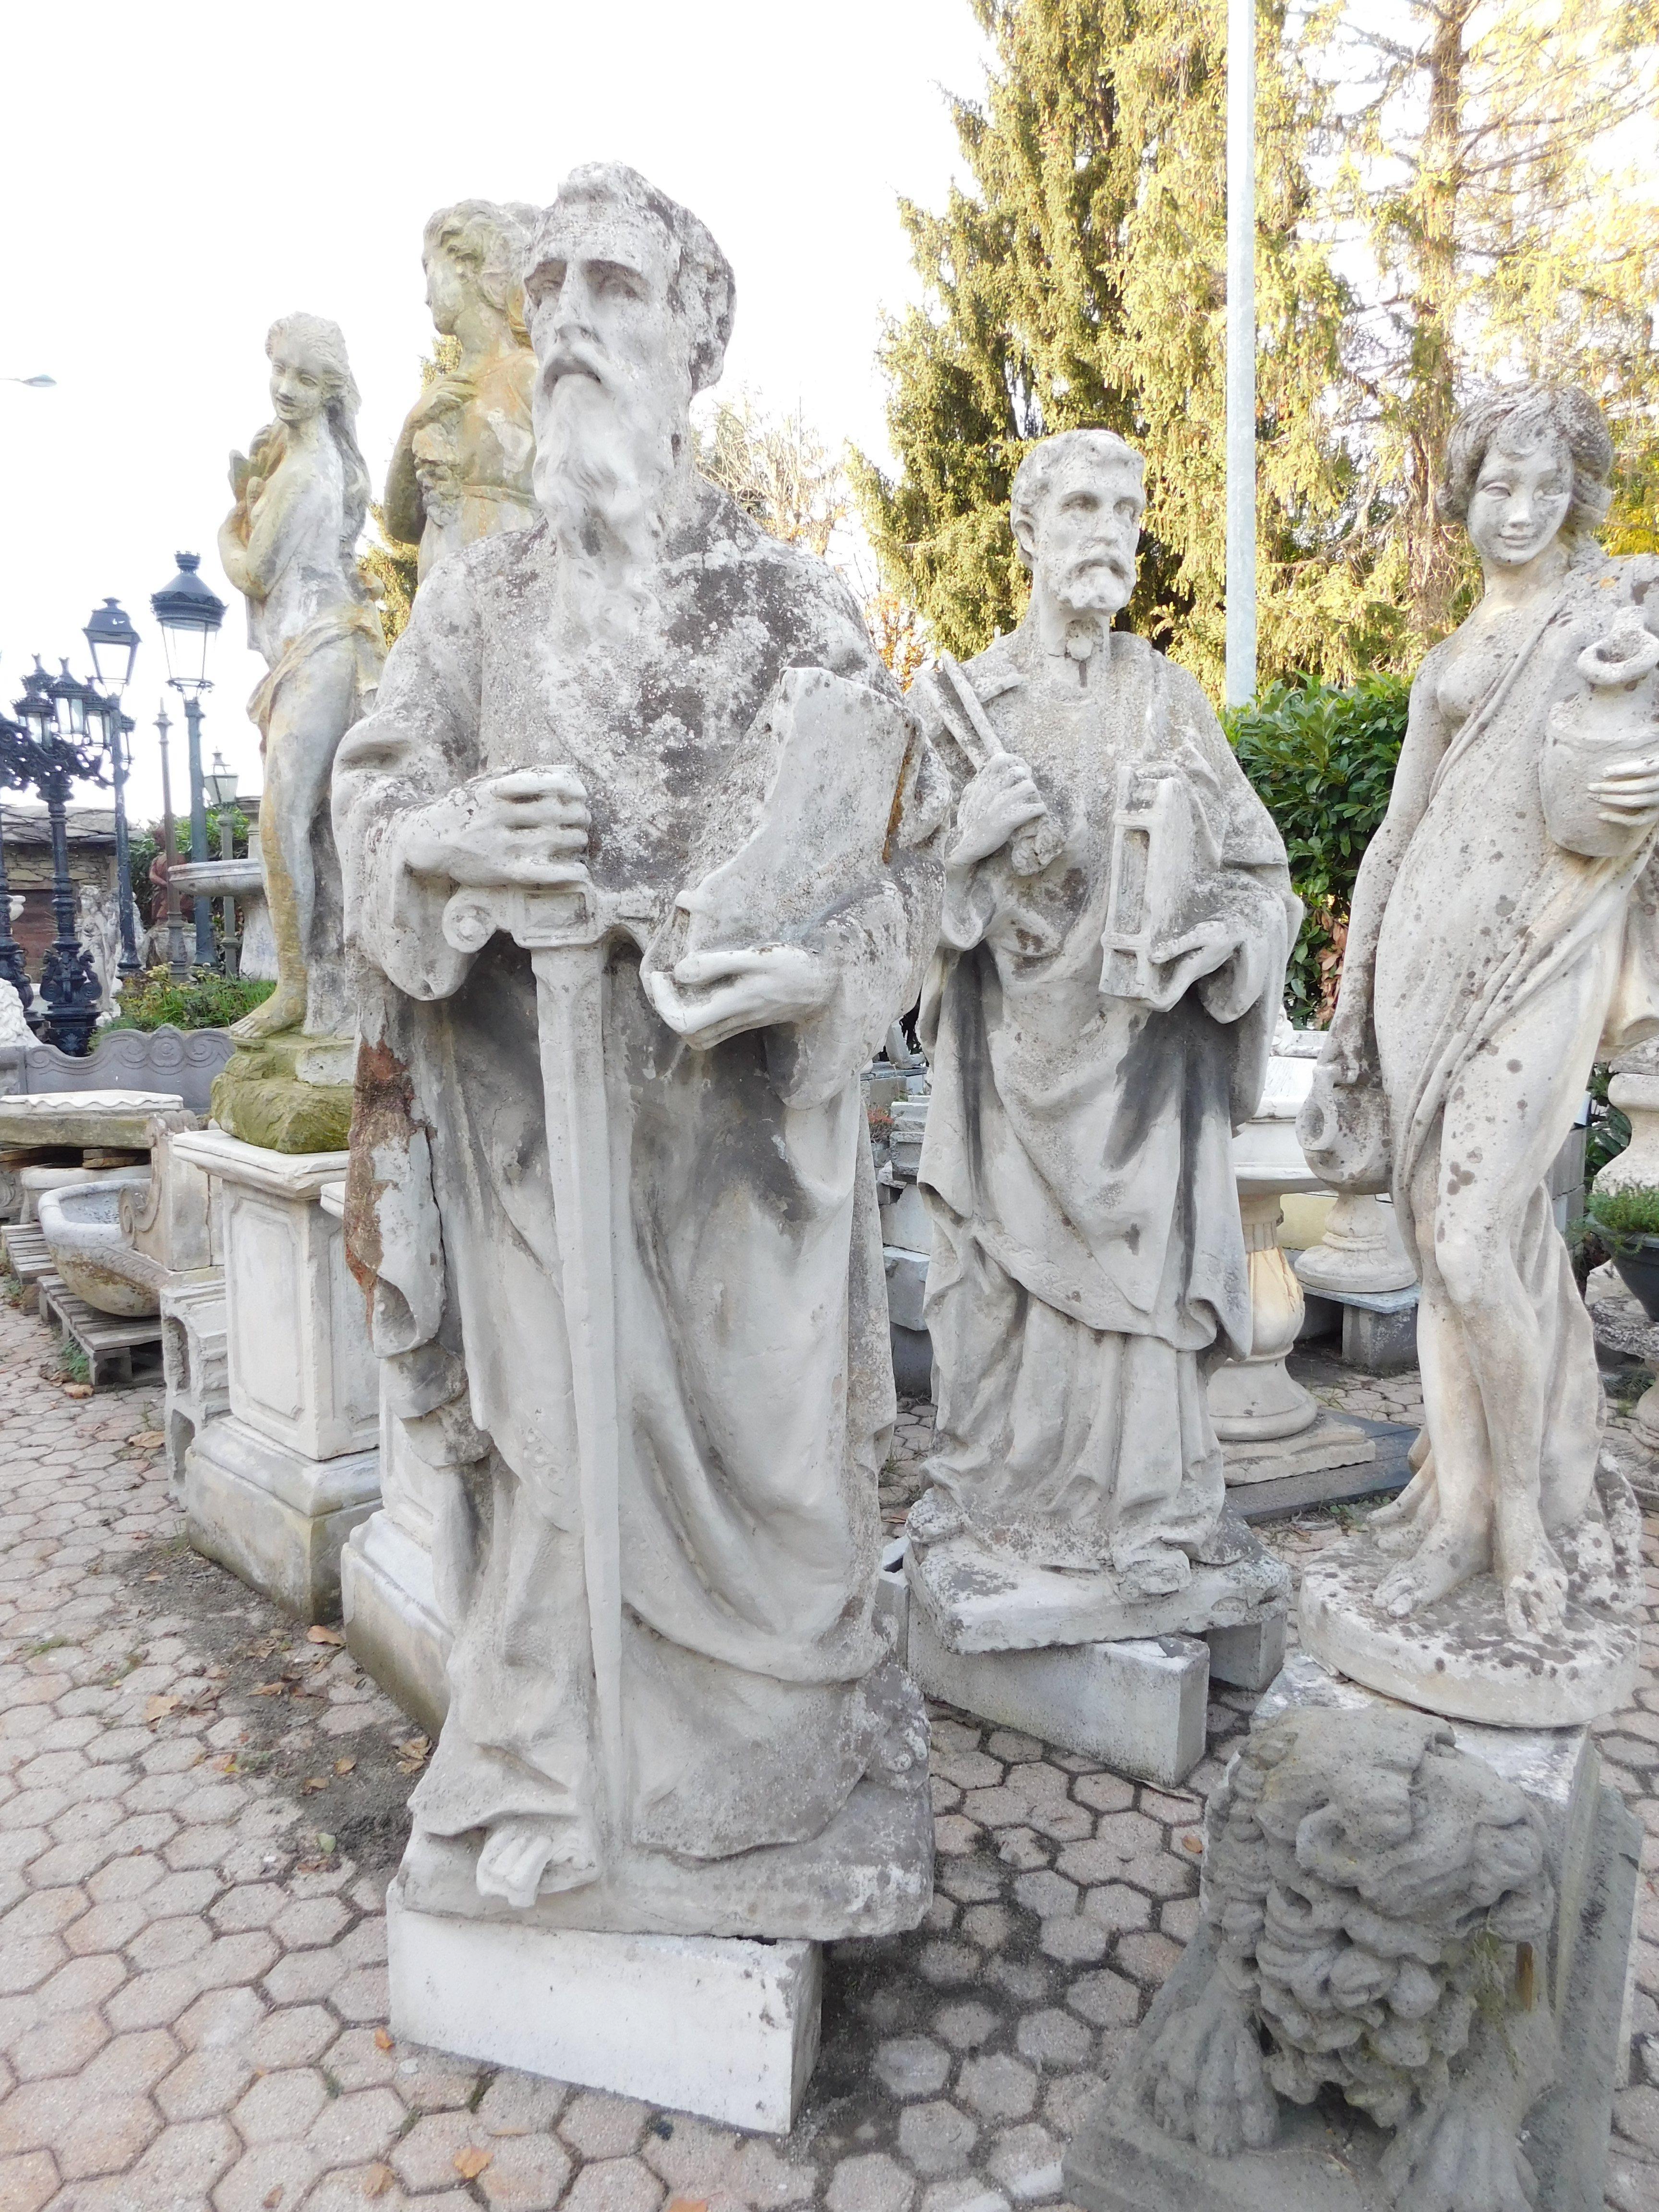 Italian Pair of outdoor concrete garden statues, depicting Saint Peter and Saint Paul, I